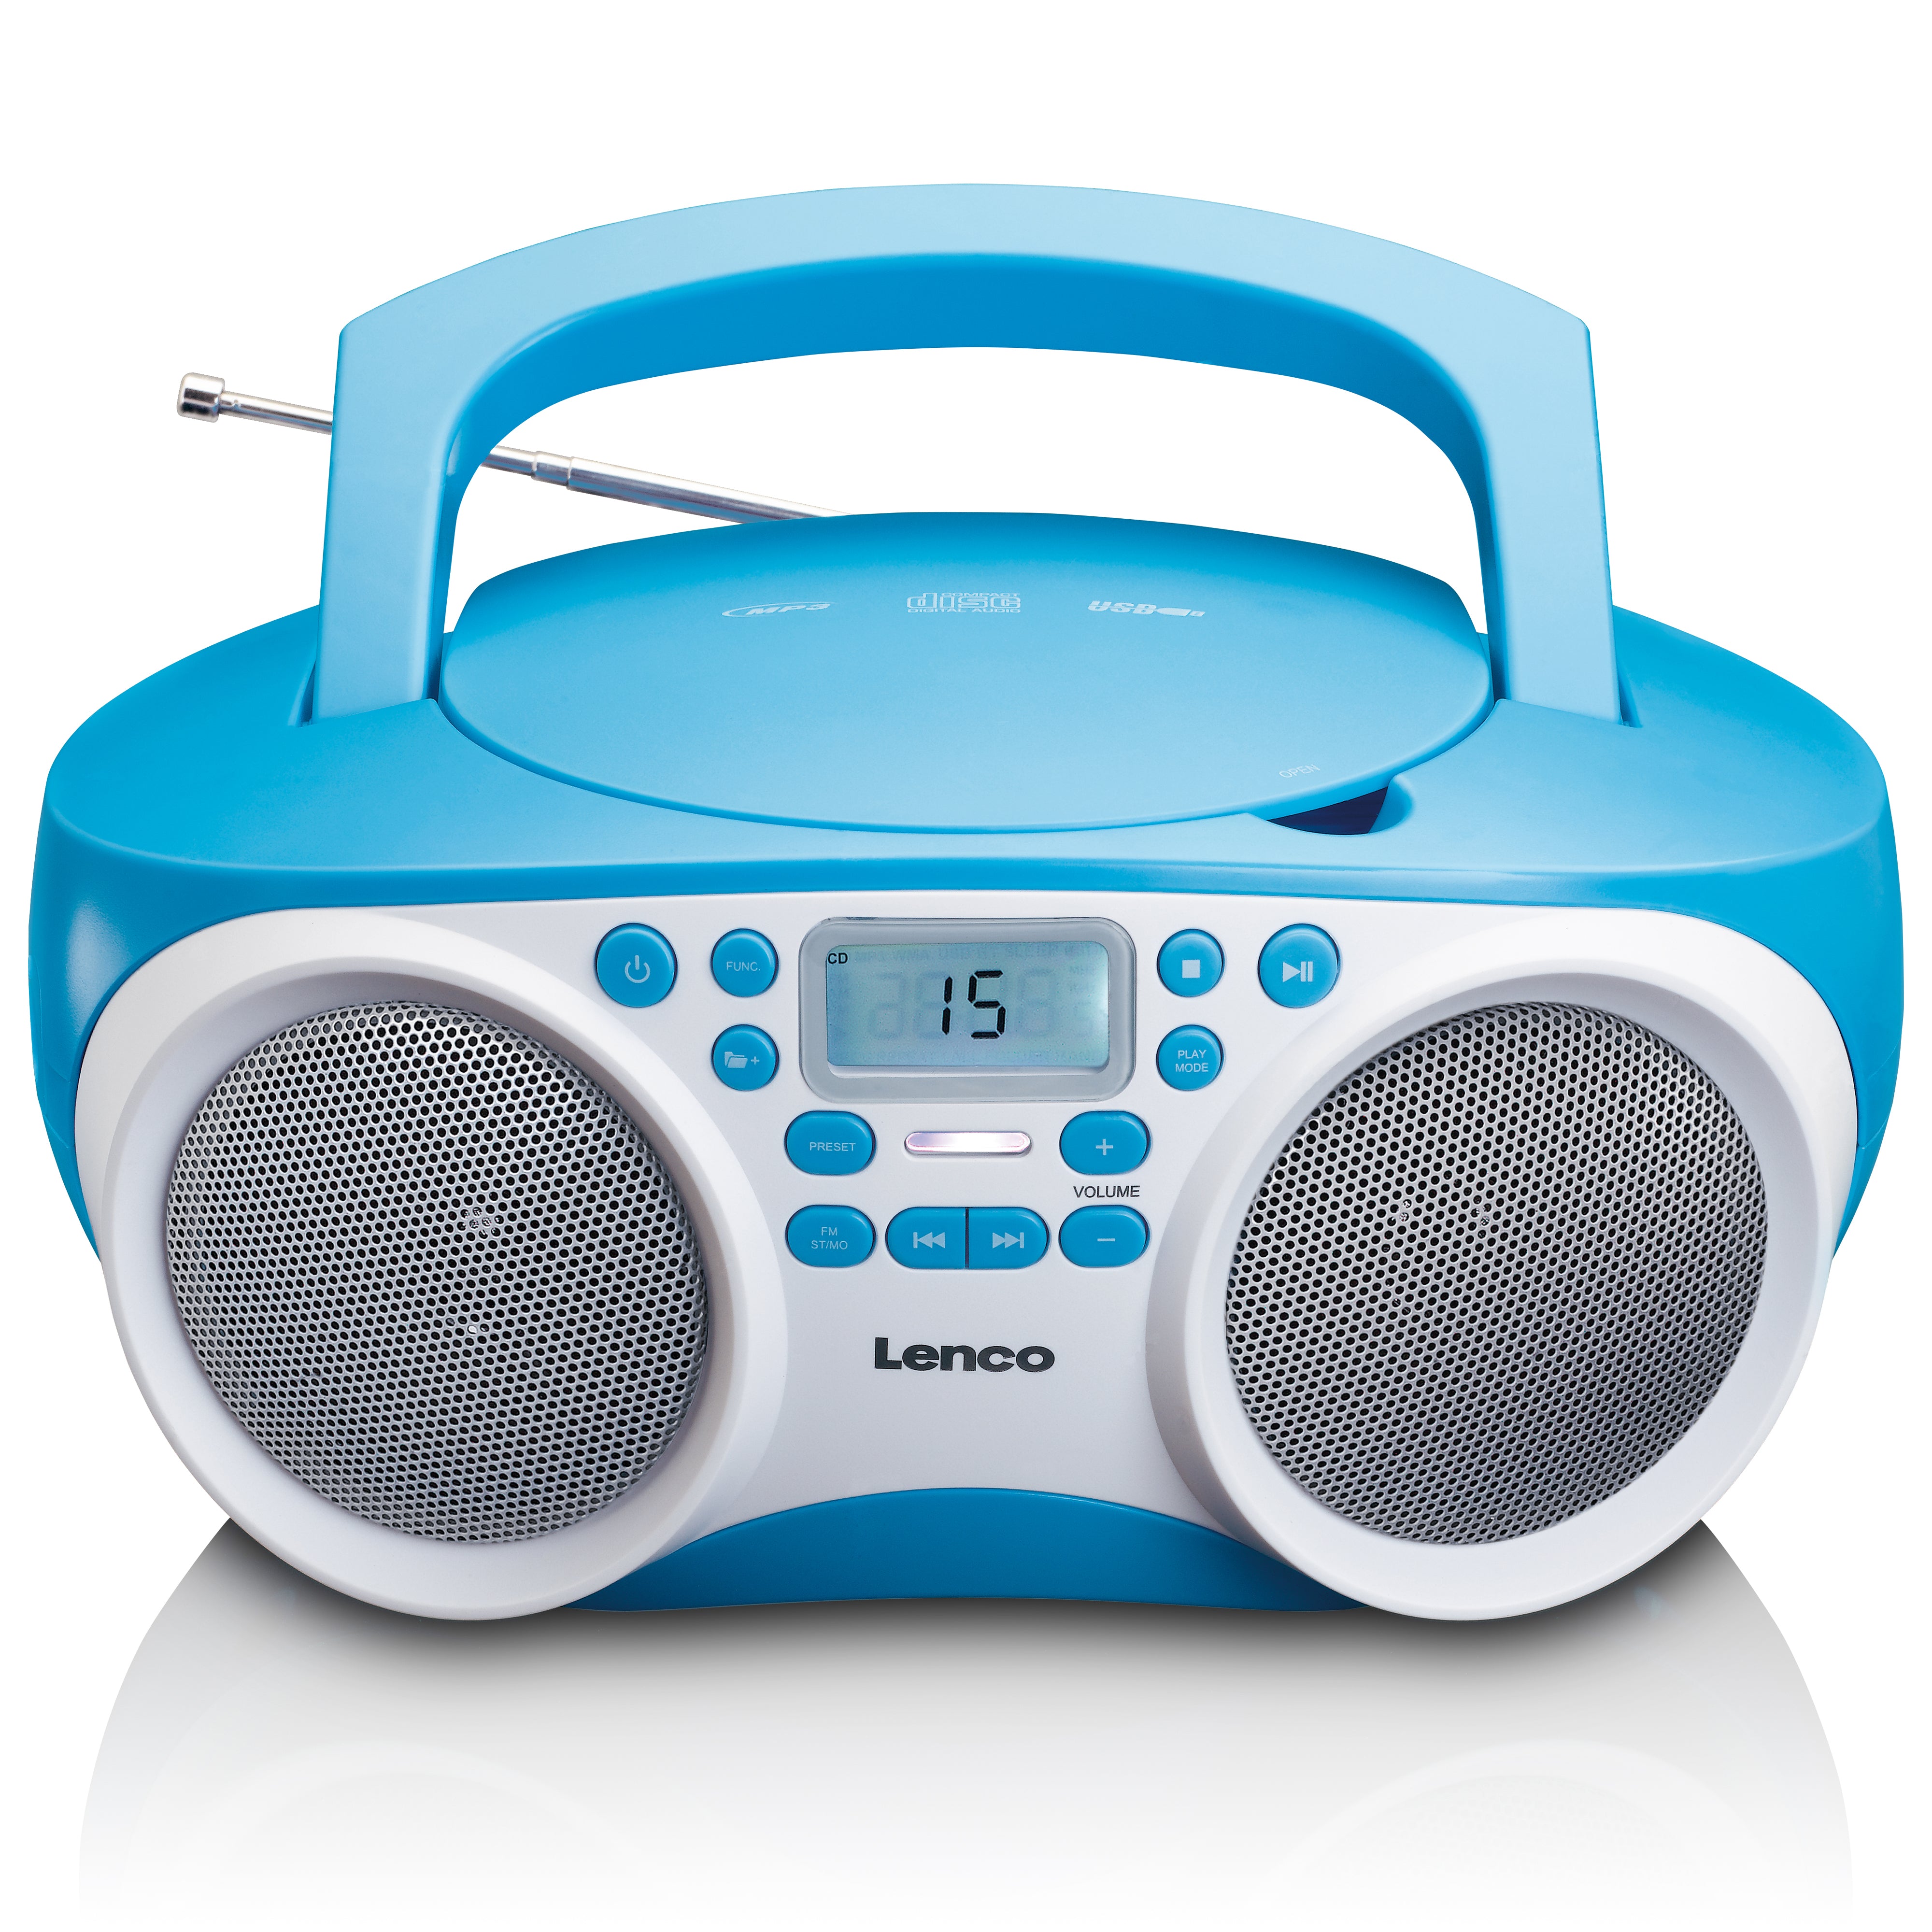 USB Blue MP3 Radio LENCO - - Lenco – Player -Catalog SCD-200BU function and with CD